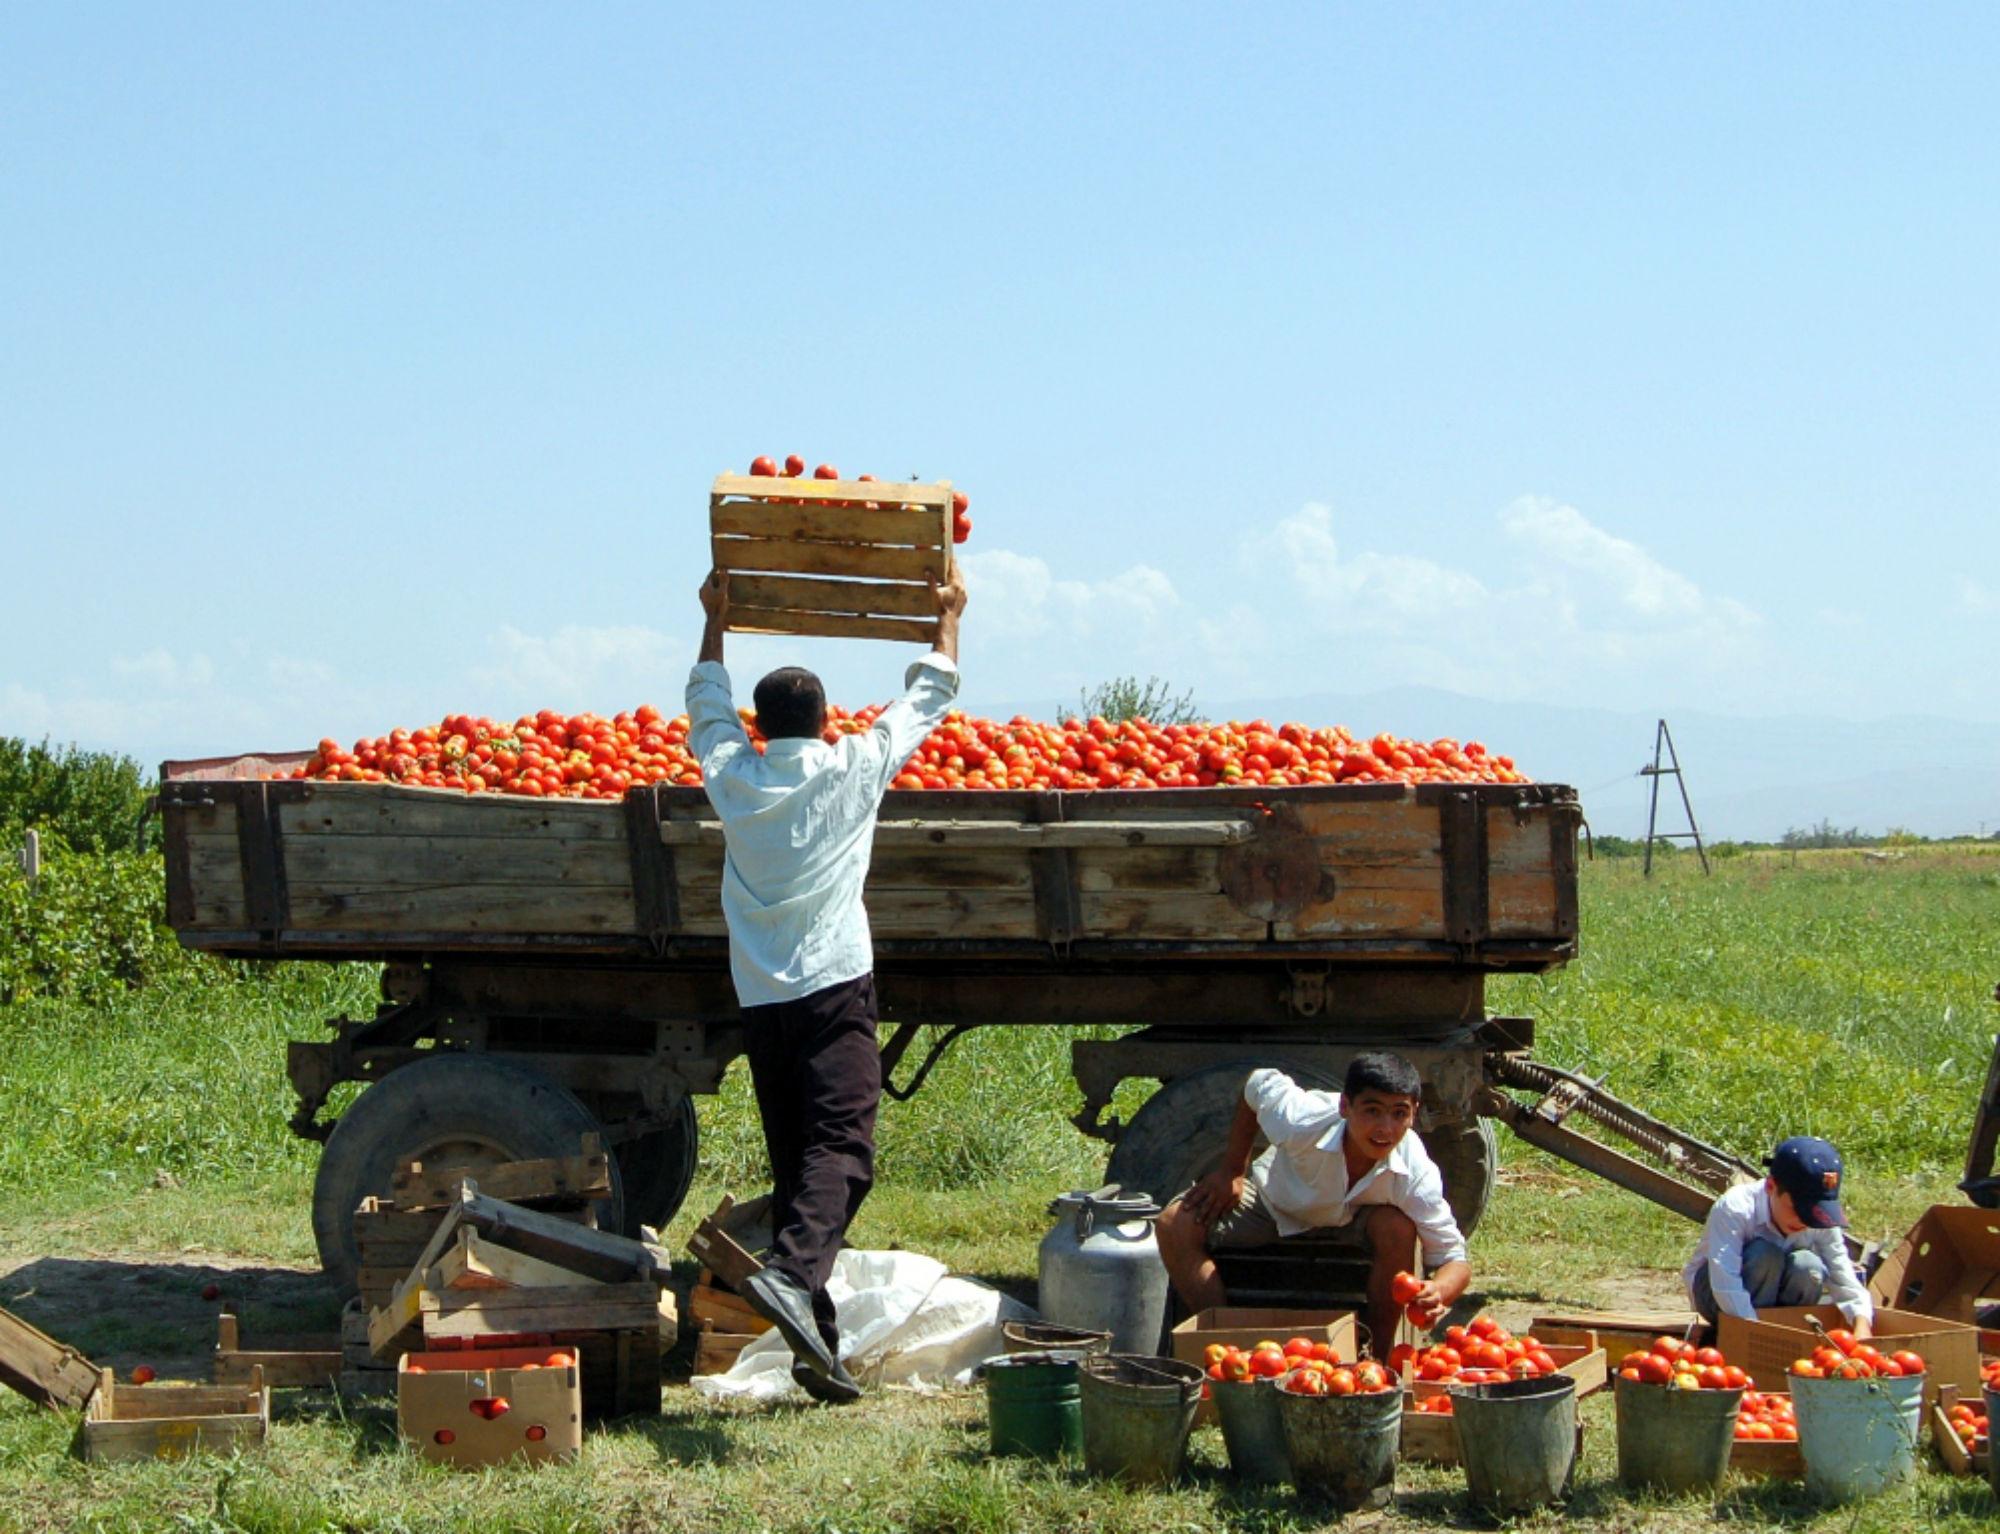 PODCAST: Armenia's Economic Future